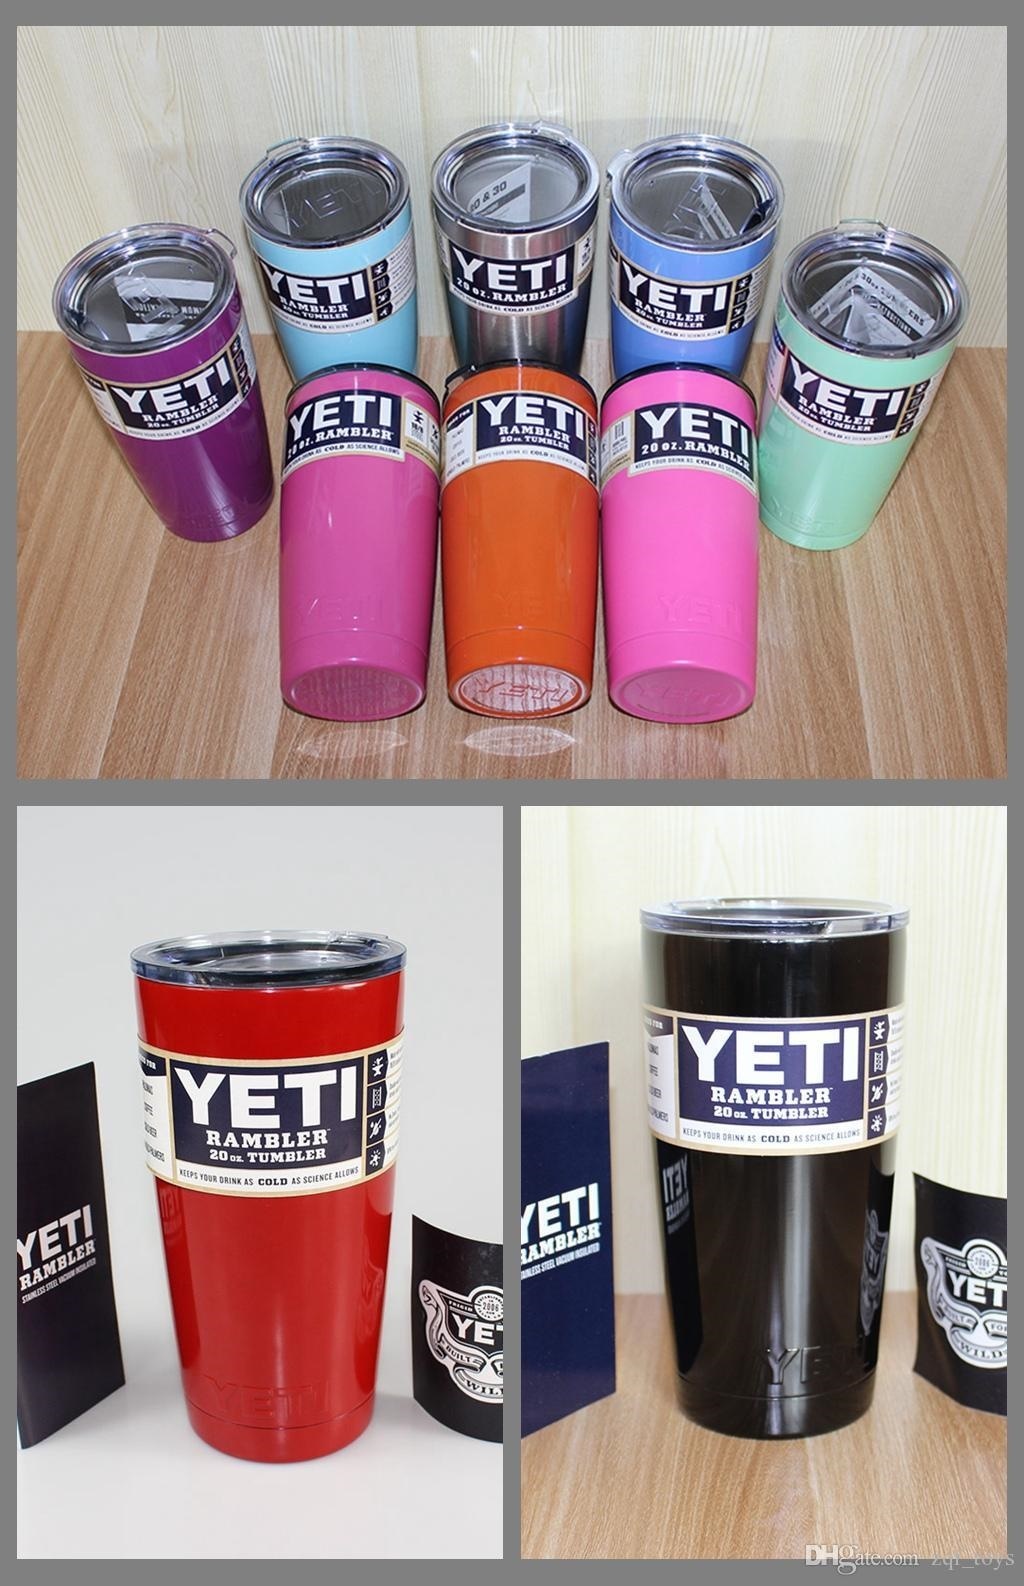 colored yeti cups 20 oz